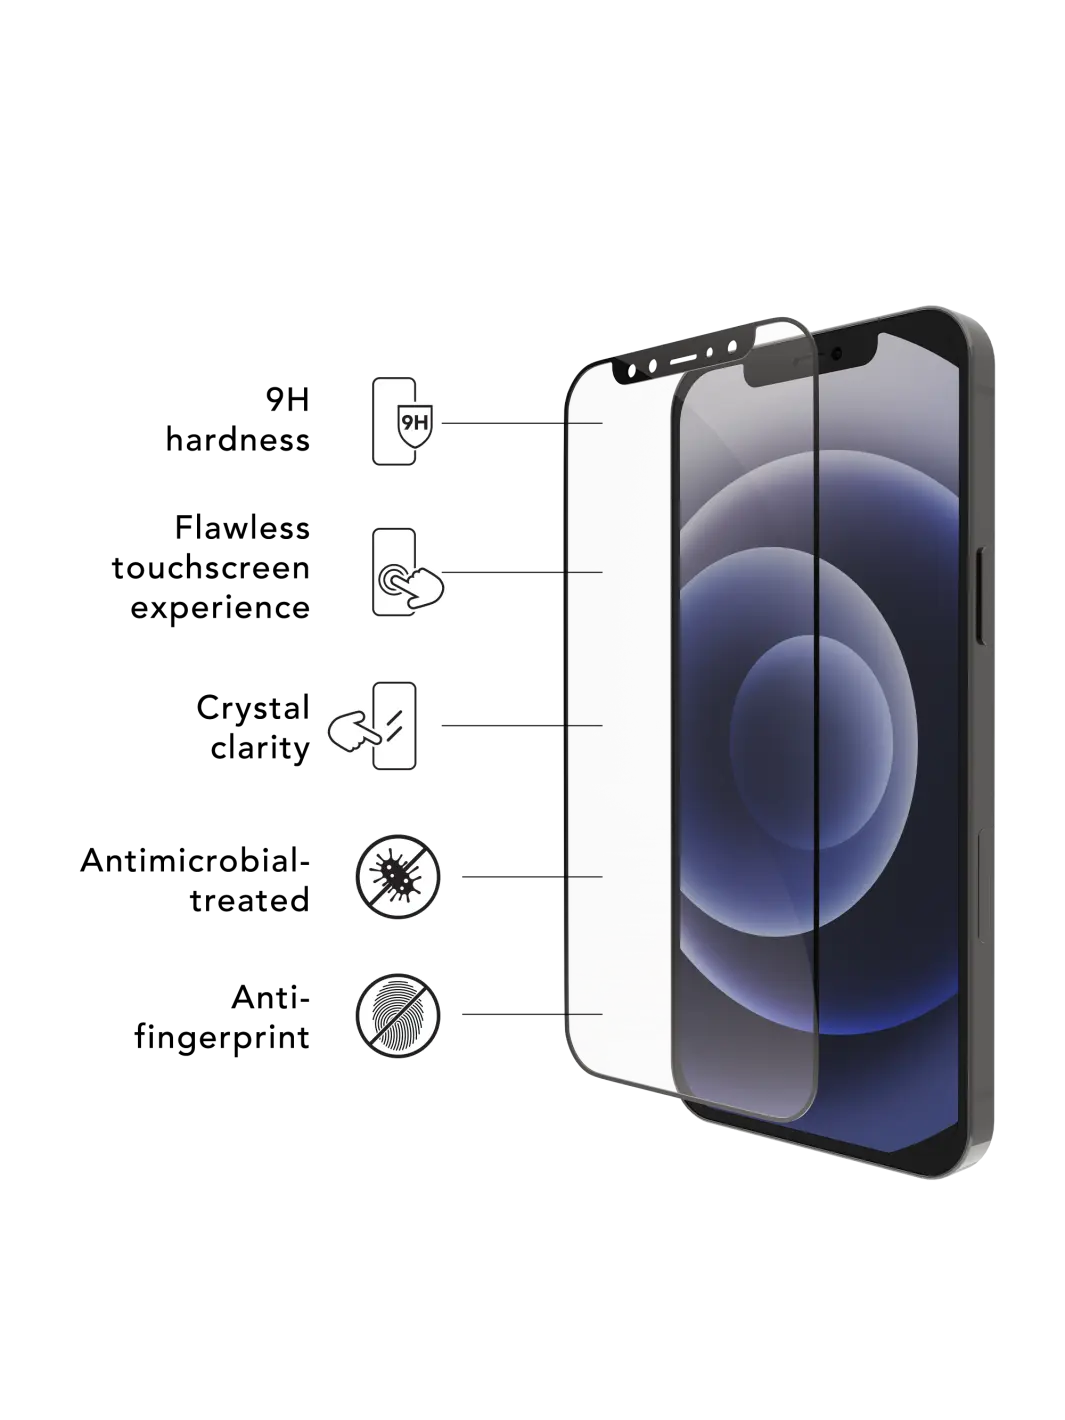 eco-shield - Phones iPhone 12/12 Pro Phone Cases